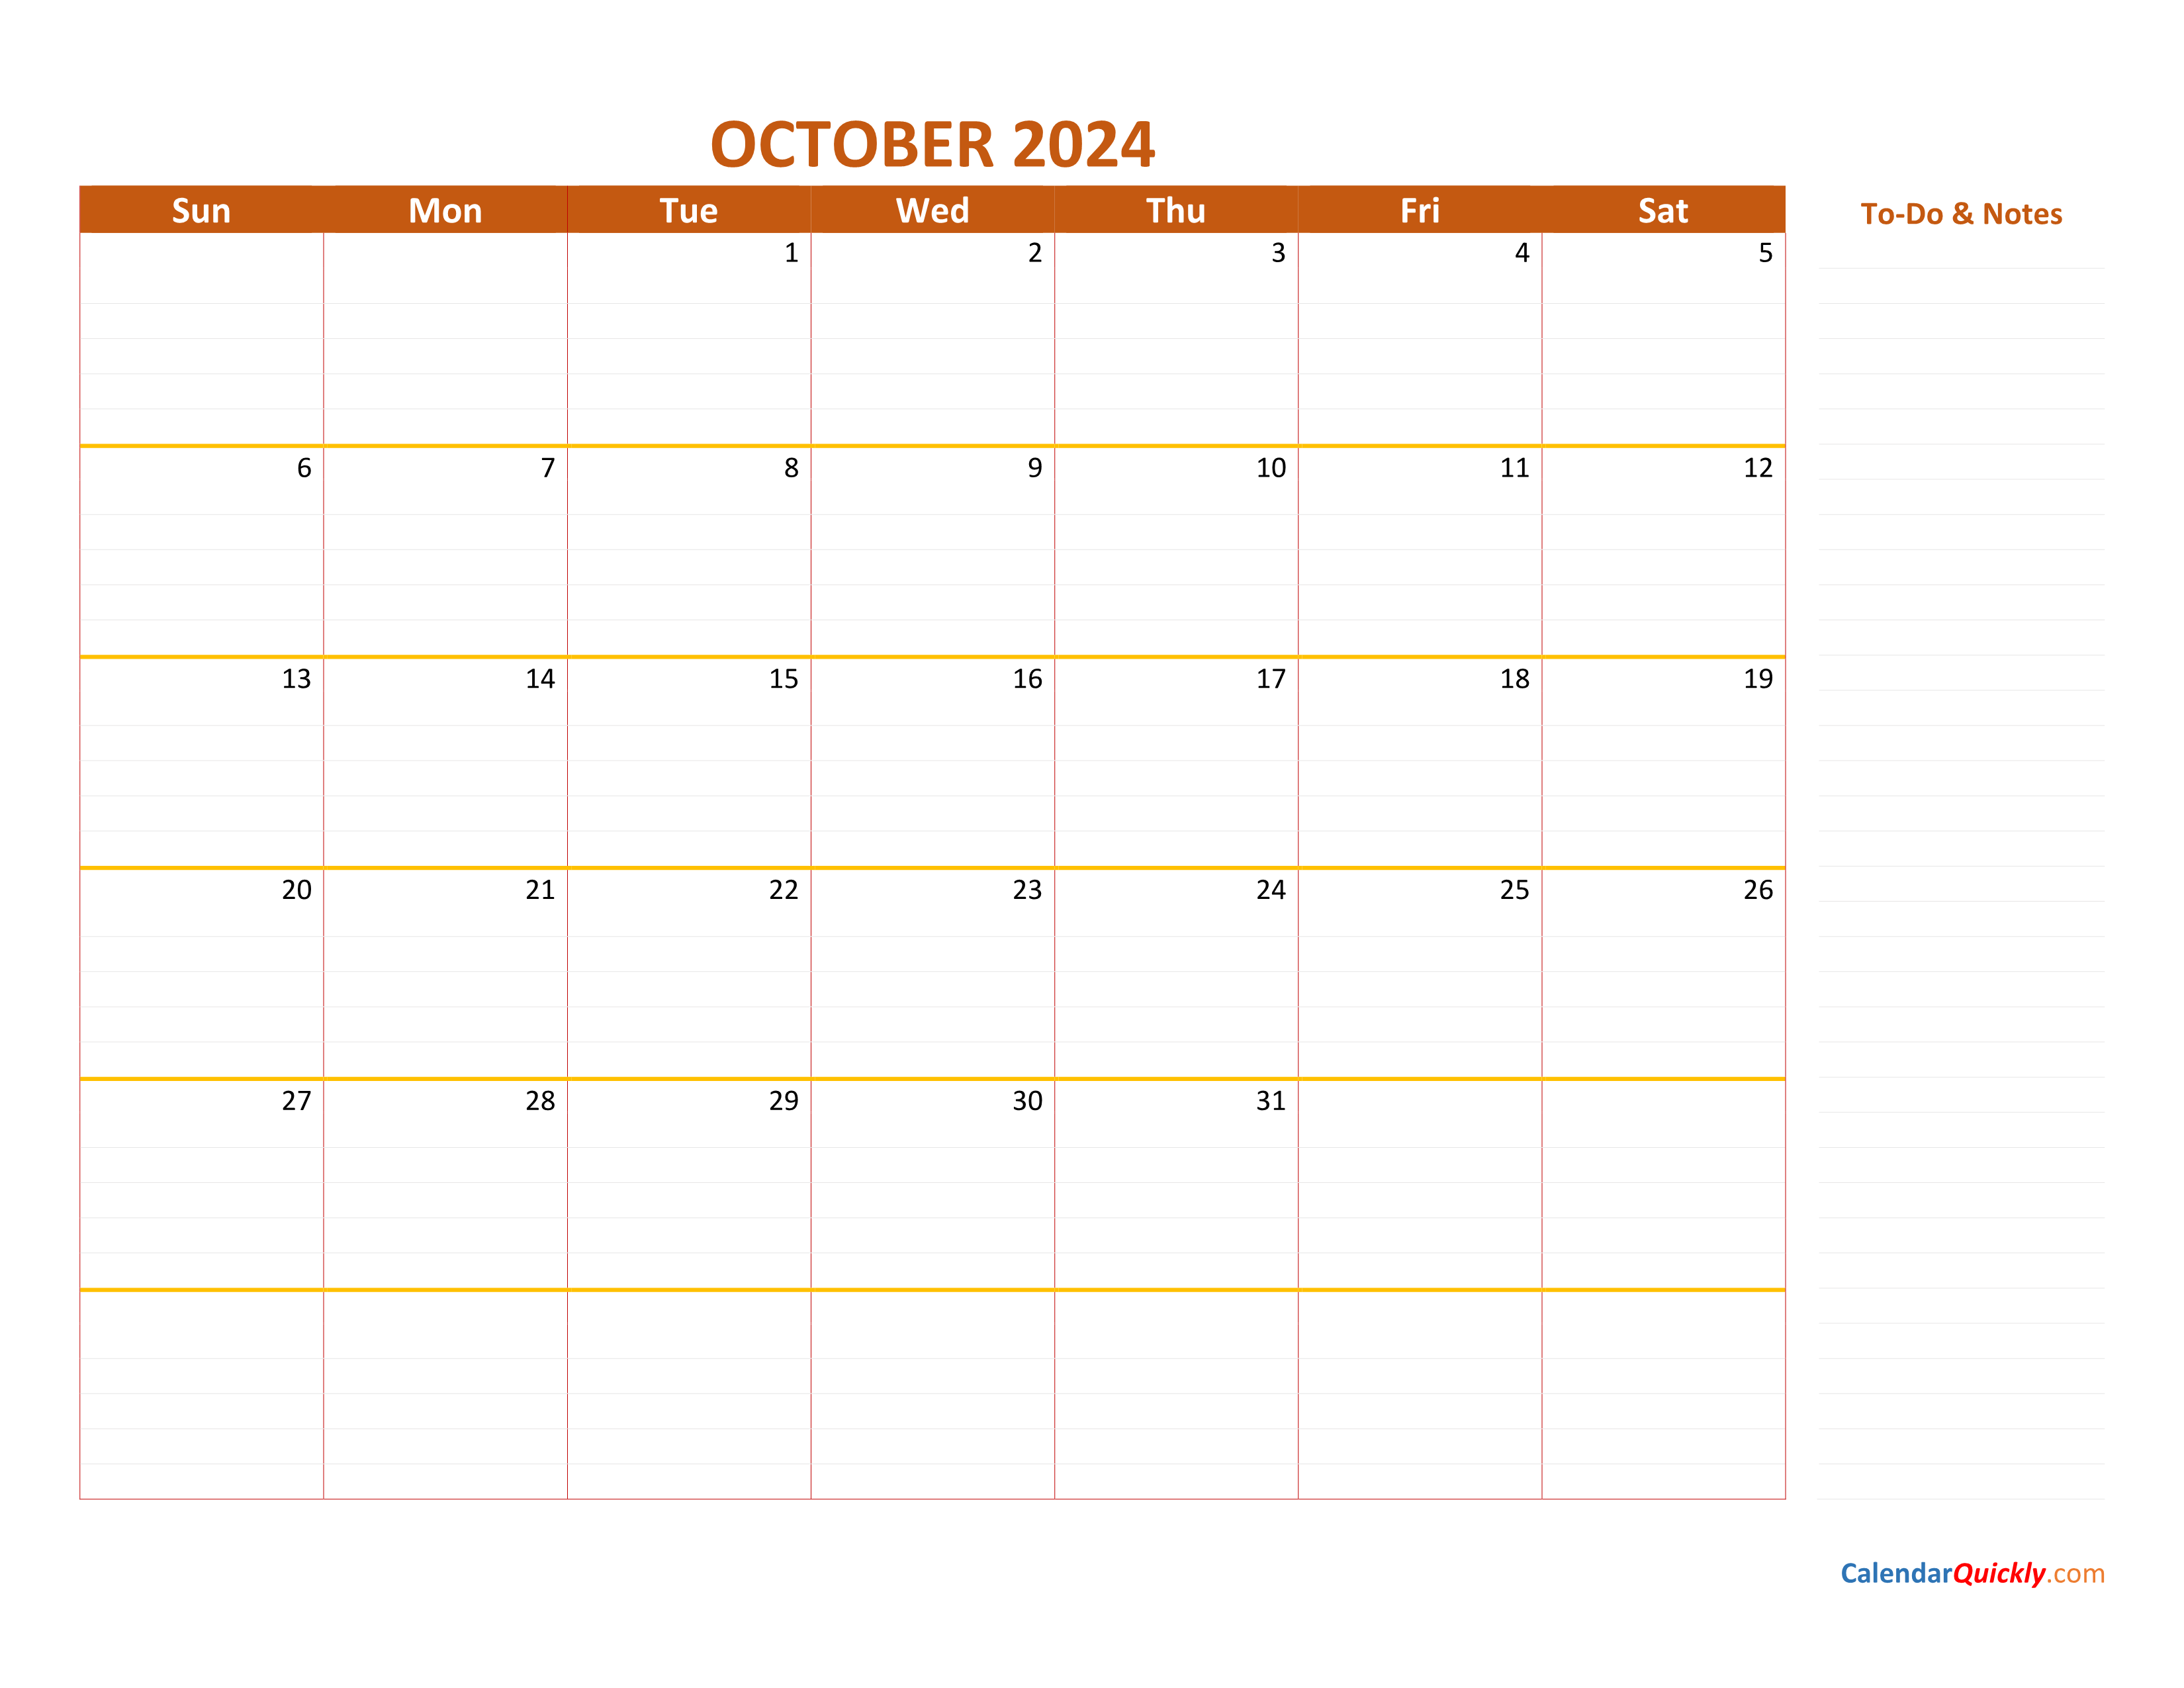 october-2024-calendar-calendar-quickly